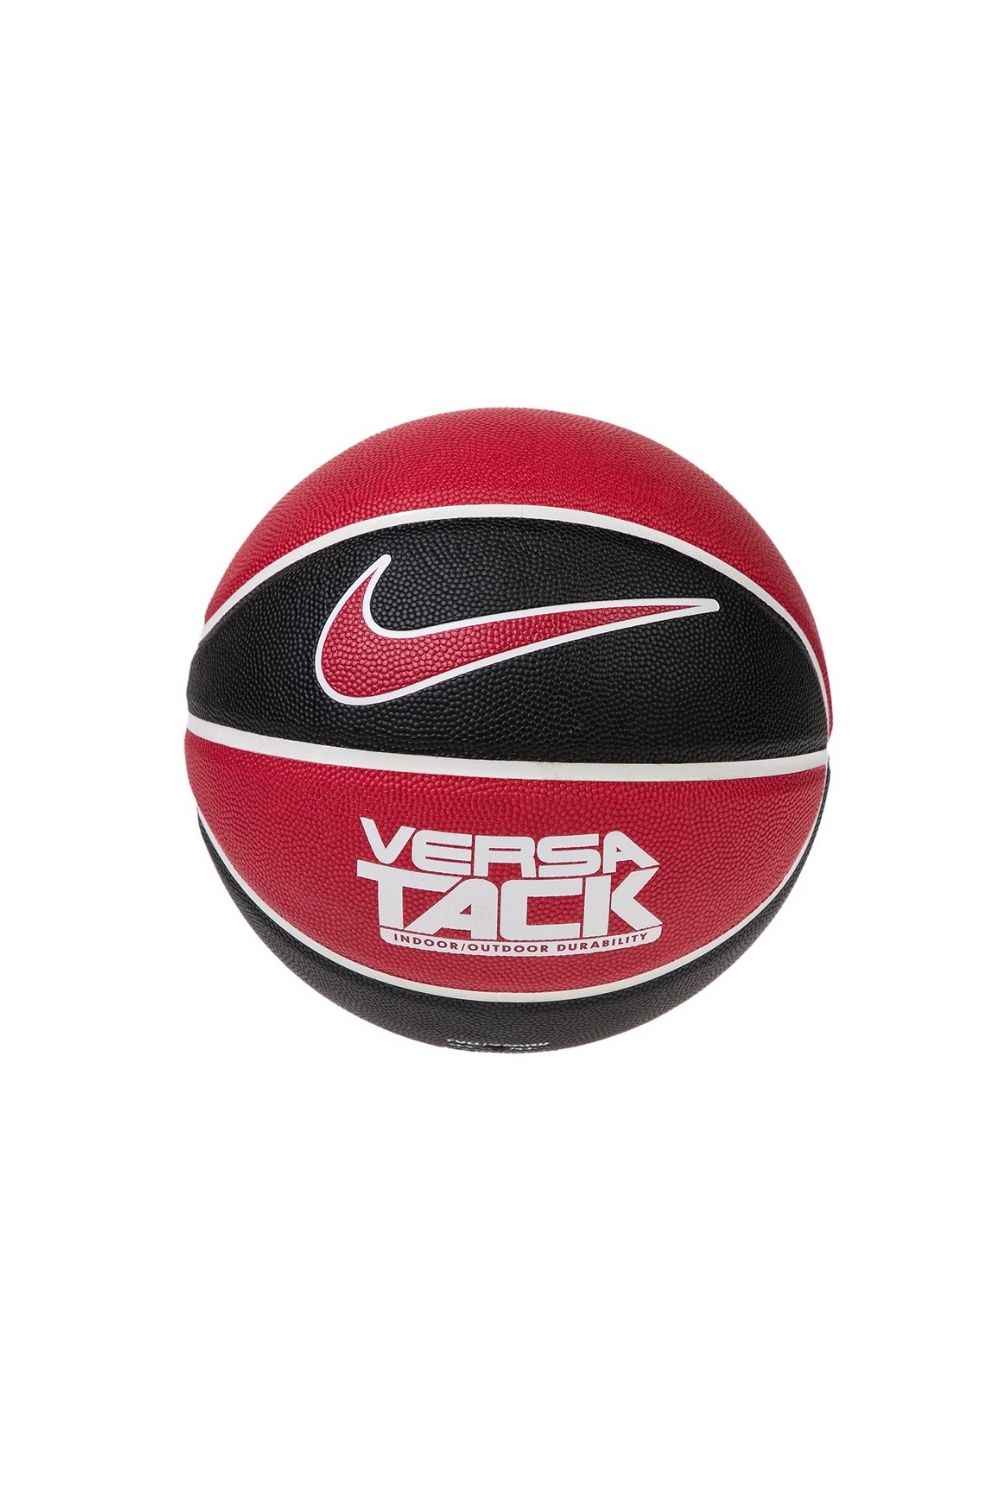 NIKE - Μπάλα μπάσκετ NIKE VERSA TACK 8P μαύρη κόκκινη Ανδρικά/Αξεσουάρ/Αθλητικά Είδη/Μπάλες